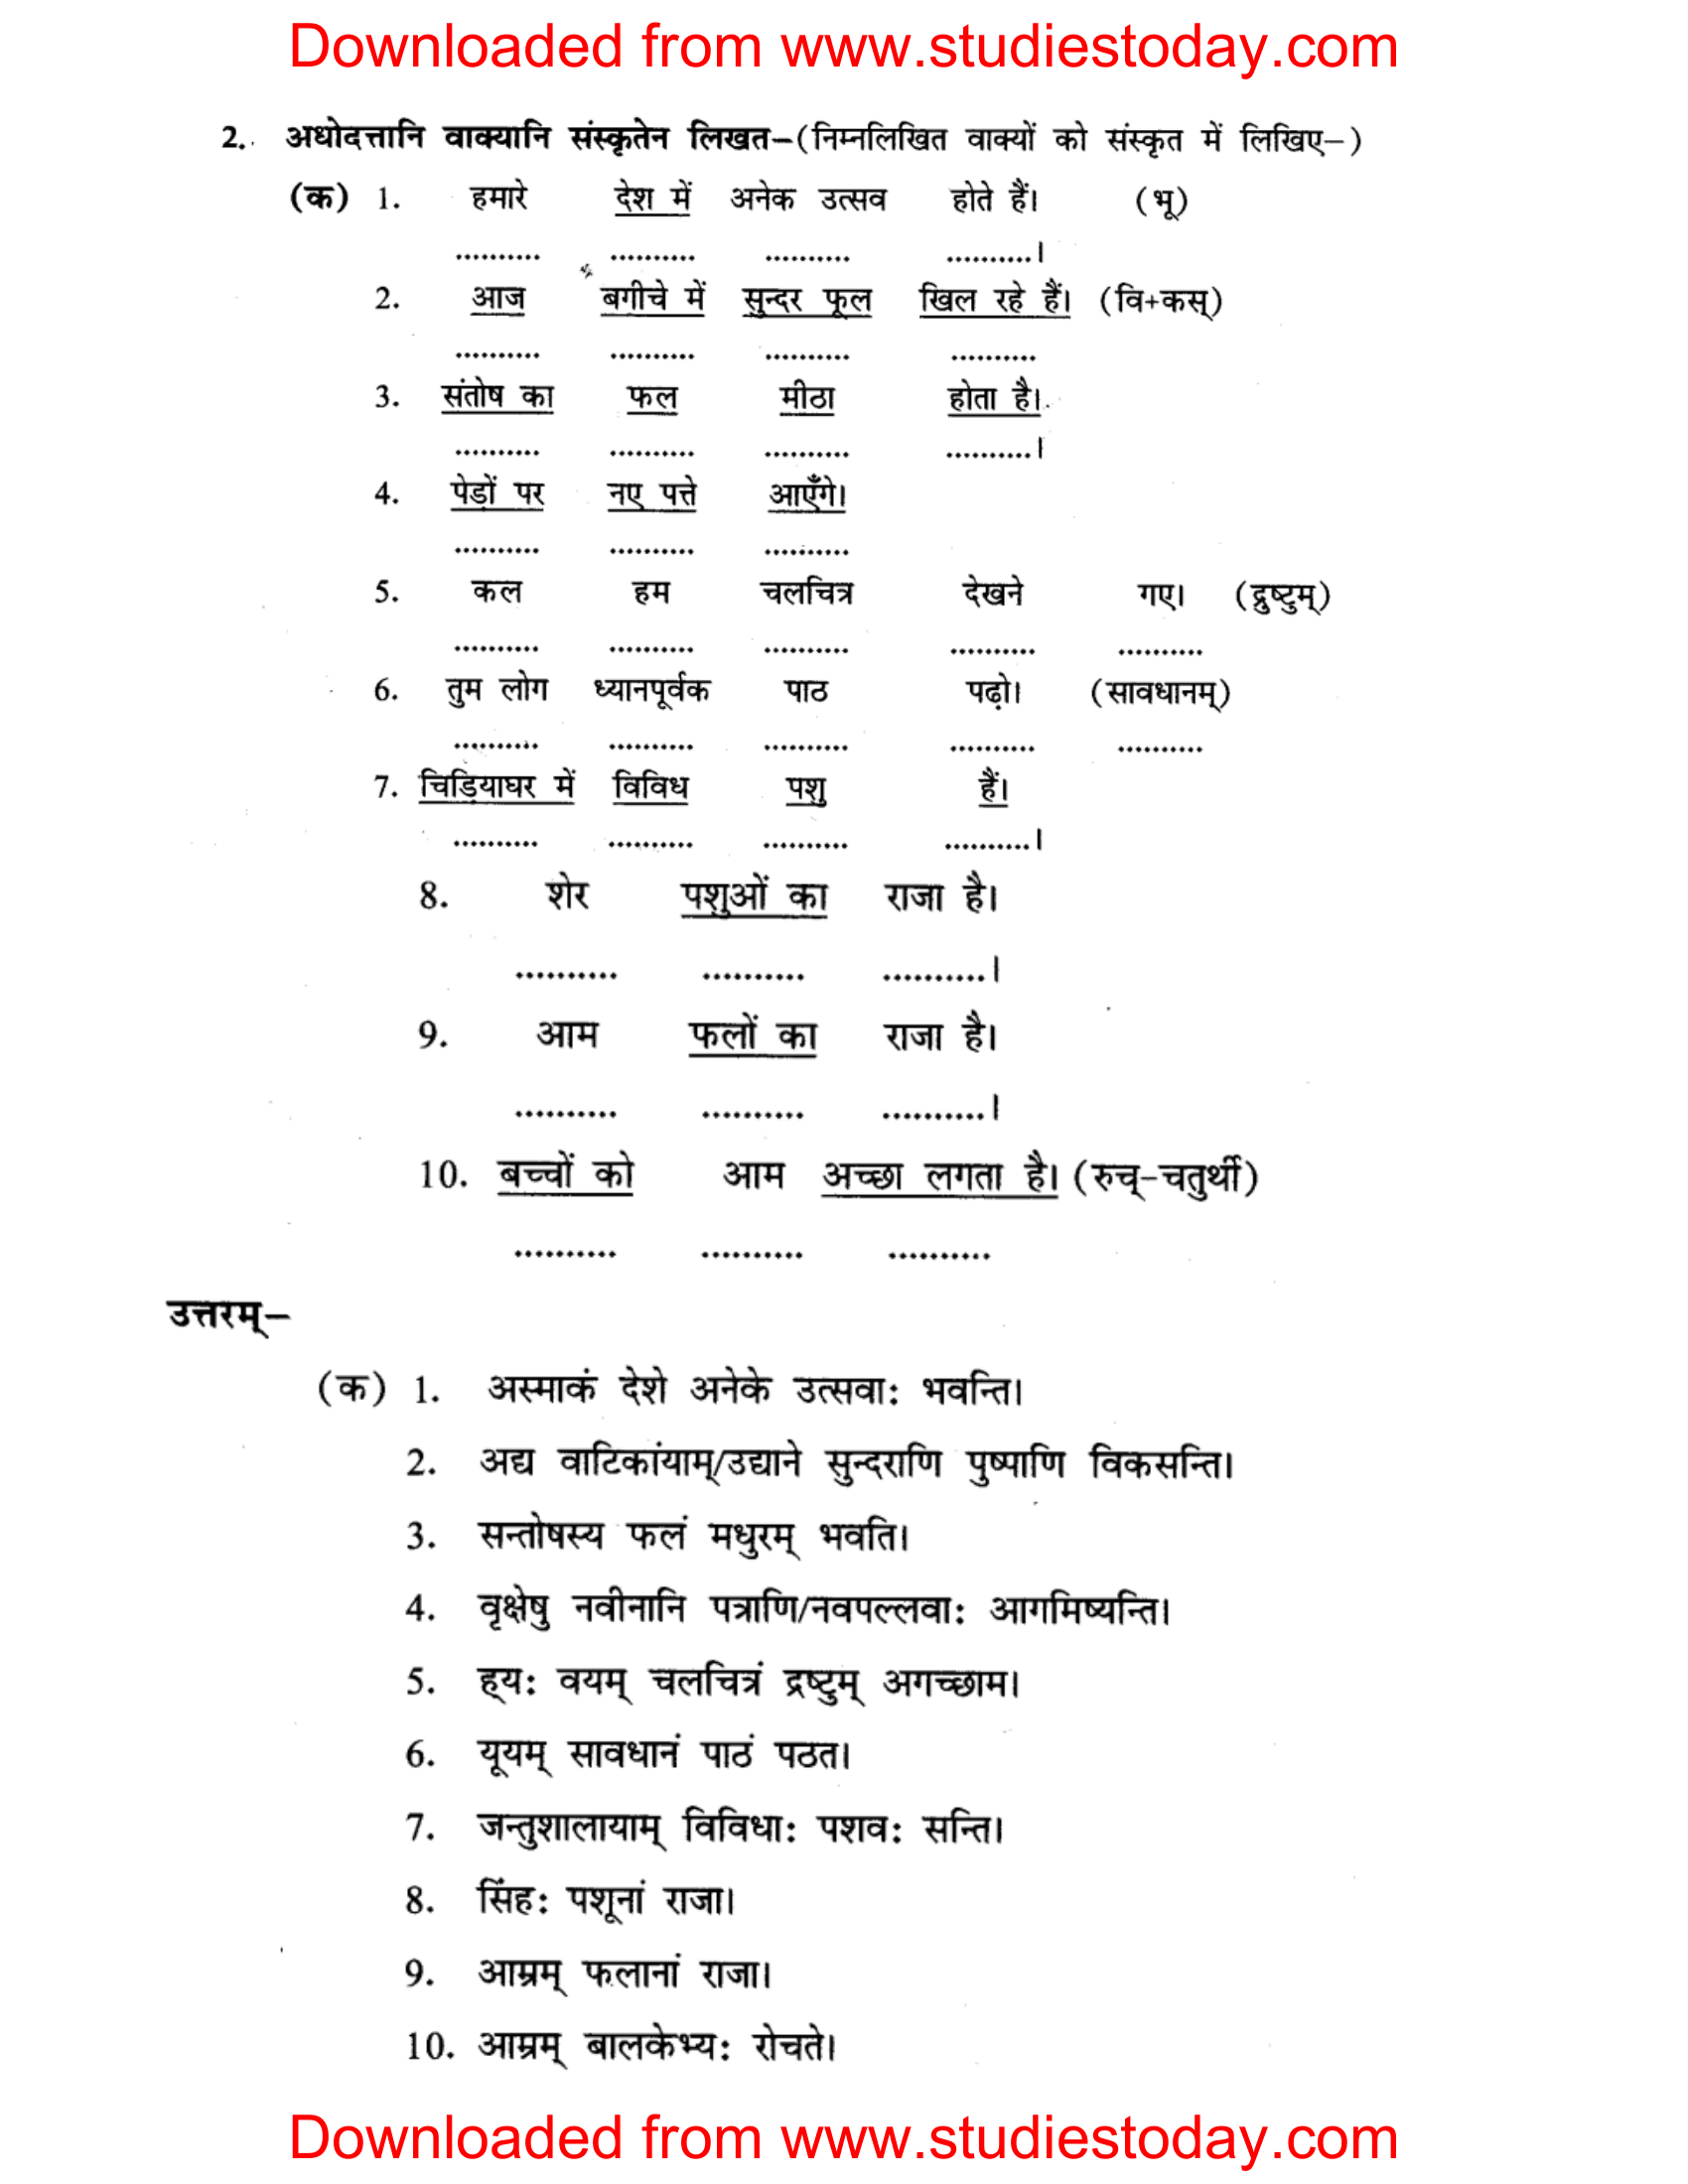 ncert-solutions-class-8-sanskrit-chapter-8-anuvad-abhyas-2